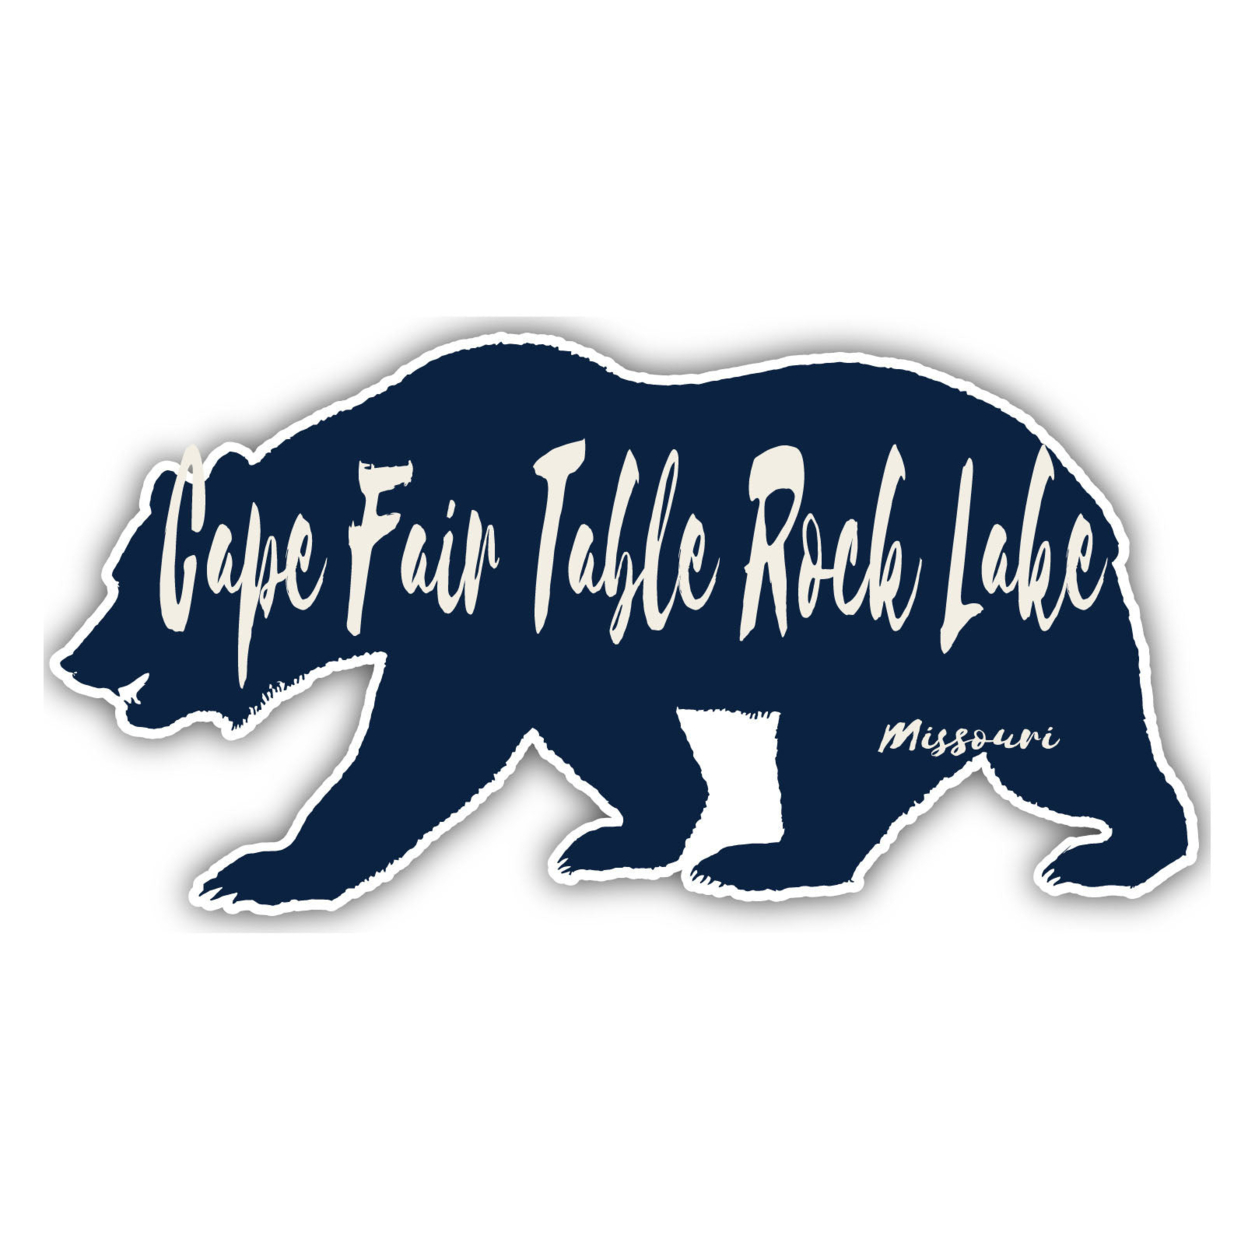 Cape Fair Table Rock Lake Missouri Souvenir Decorative Stickers (Choose Theme And Size) - 4-Pack, 2-Inch, Bear